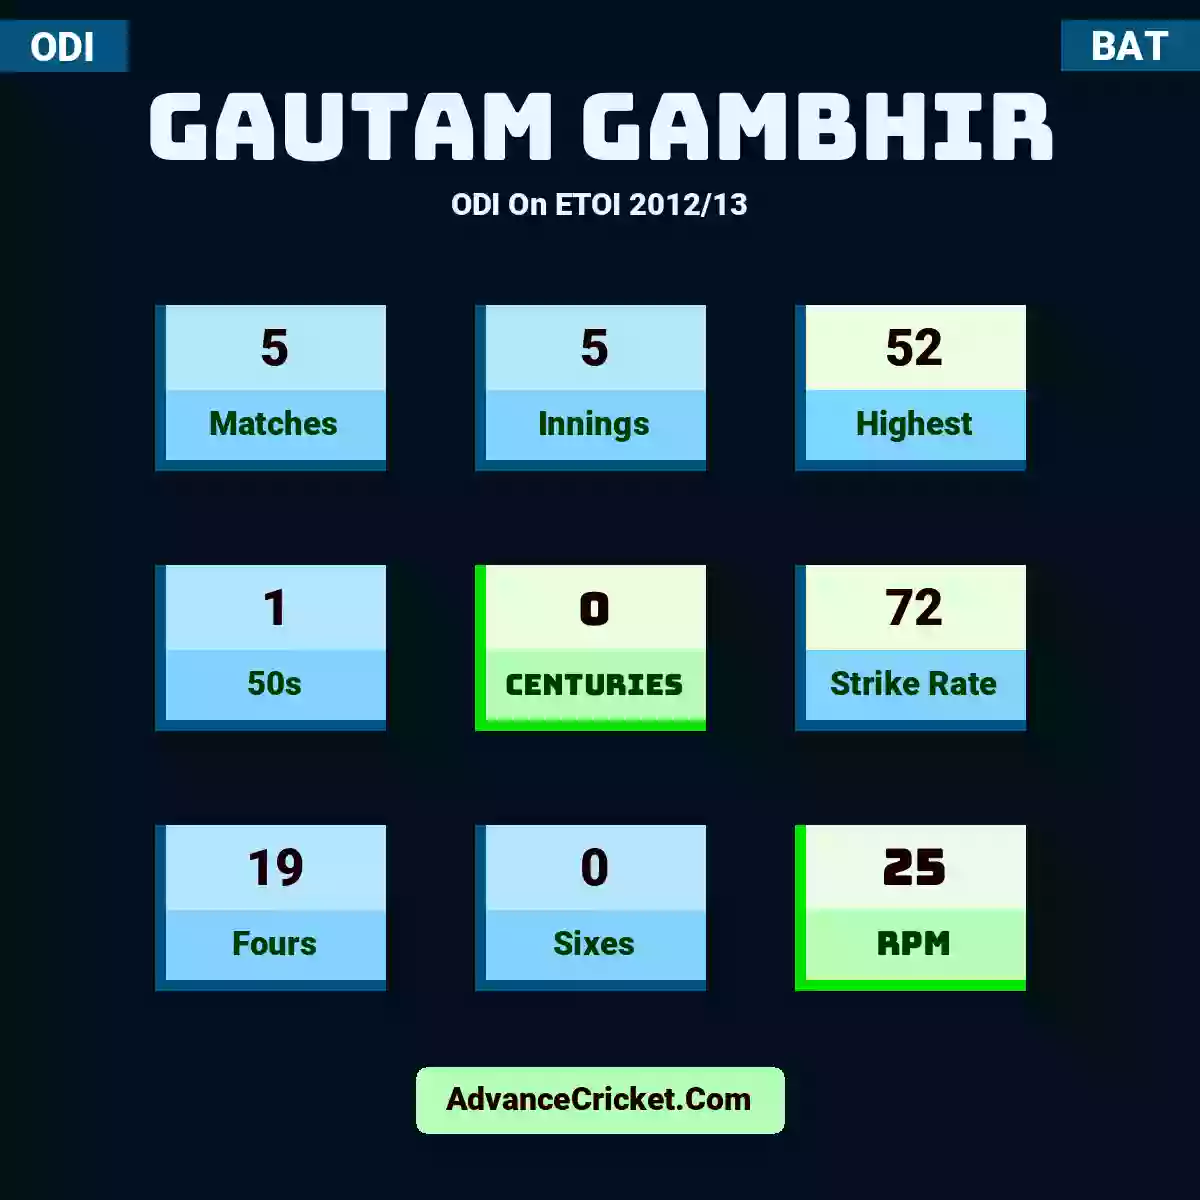 Gautam Gambhir ODI  On ETOI 2012/13, Gautam Gambhir played 5 matches, scored 52 runs as highest, 1 half-centuries, and 0 centuries, with a strike rate of 72. G.Gambhir hit 19 fours and 0 sixes, with an RPM of 25.